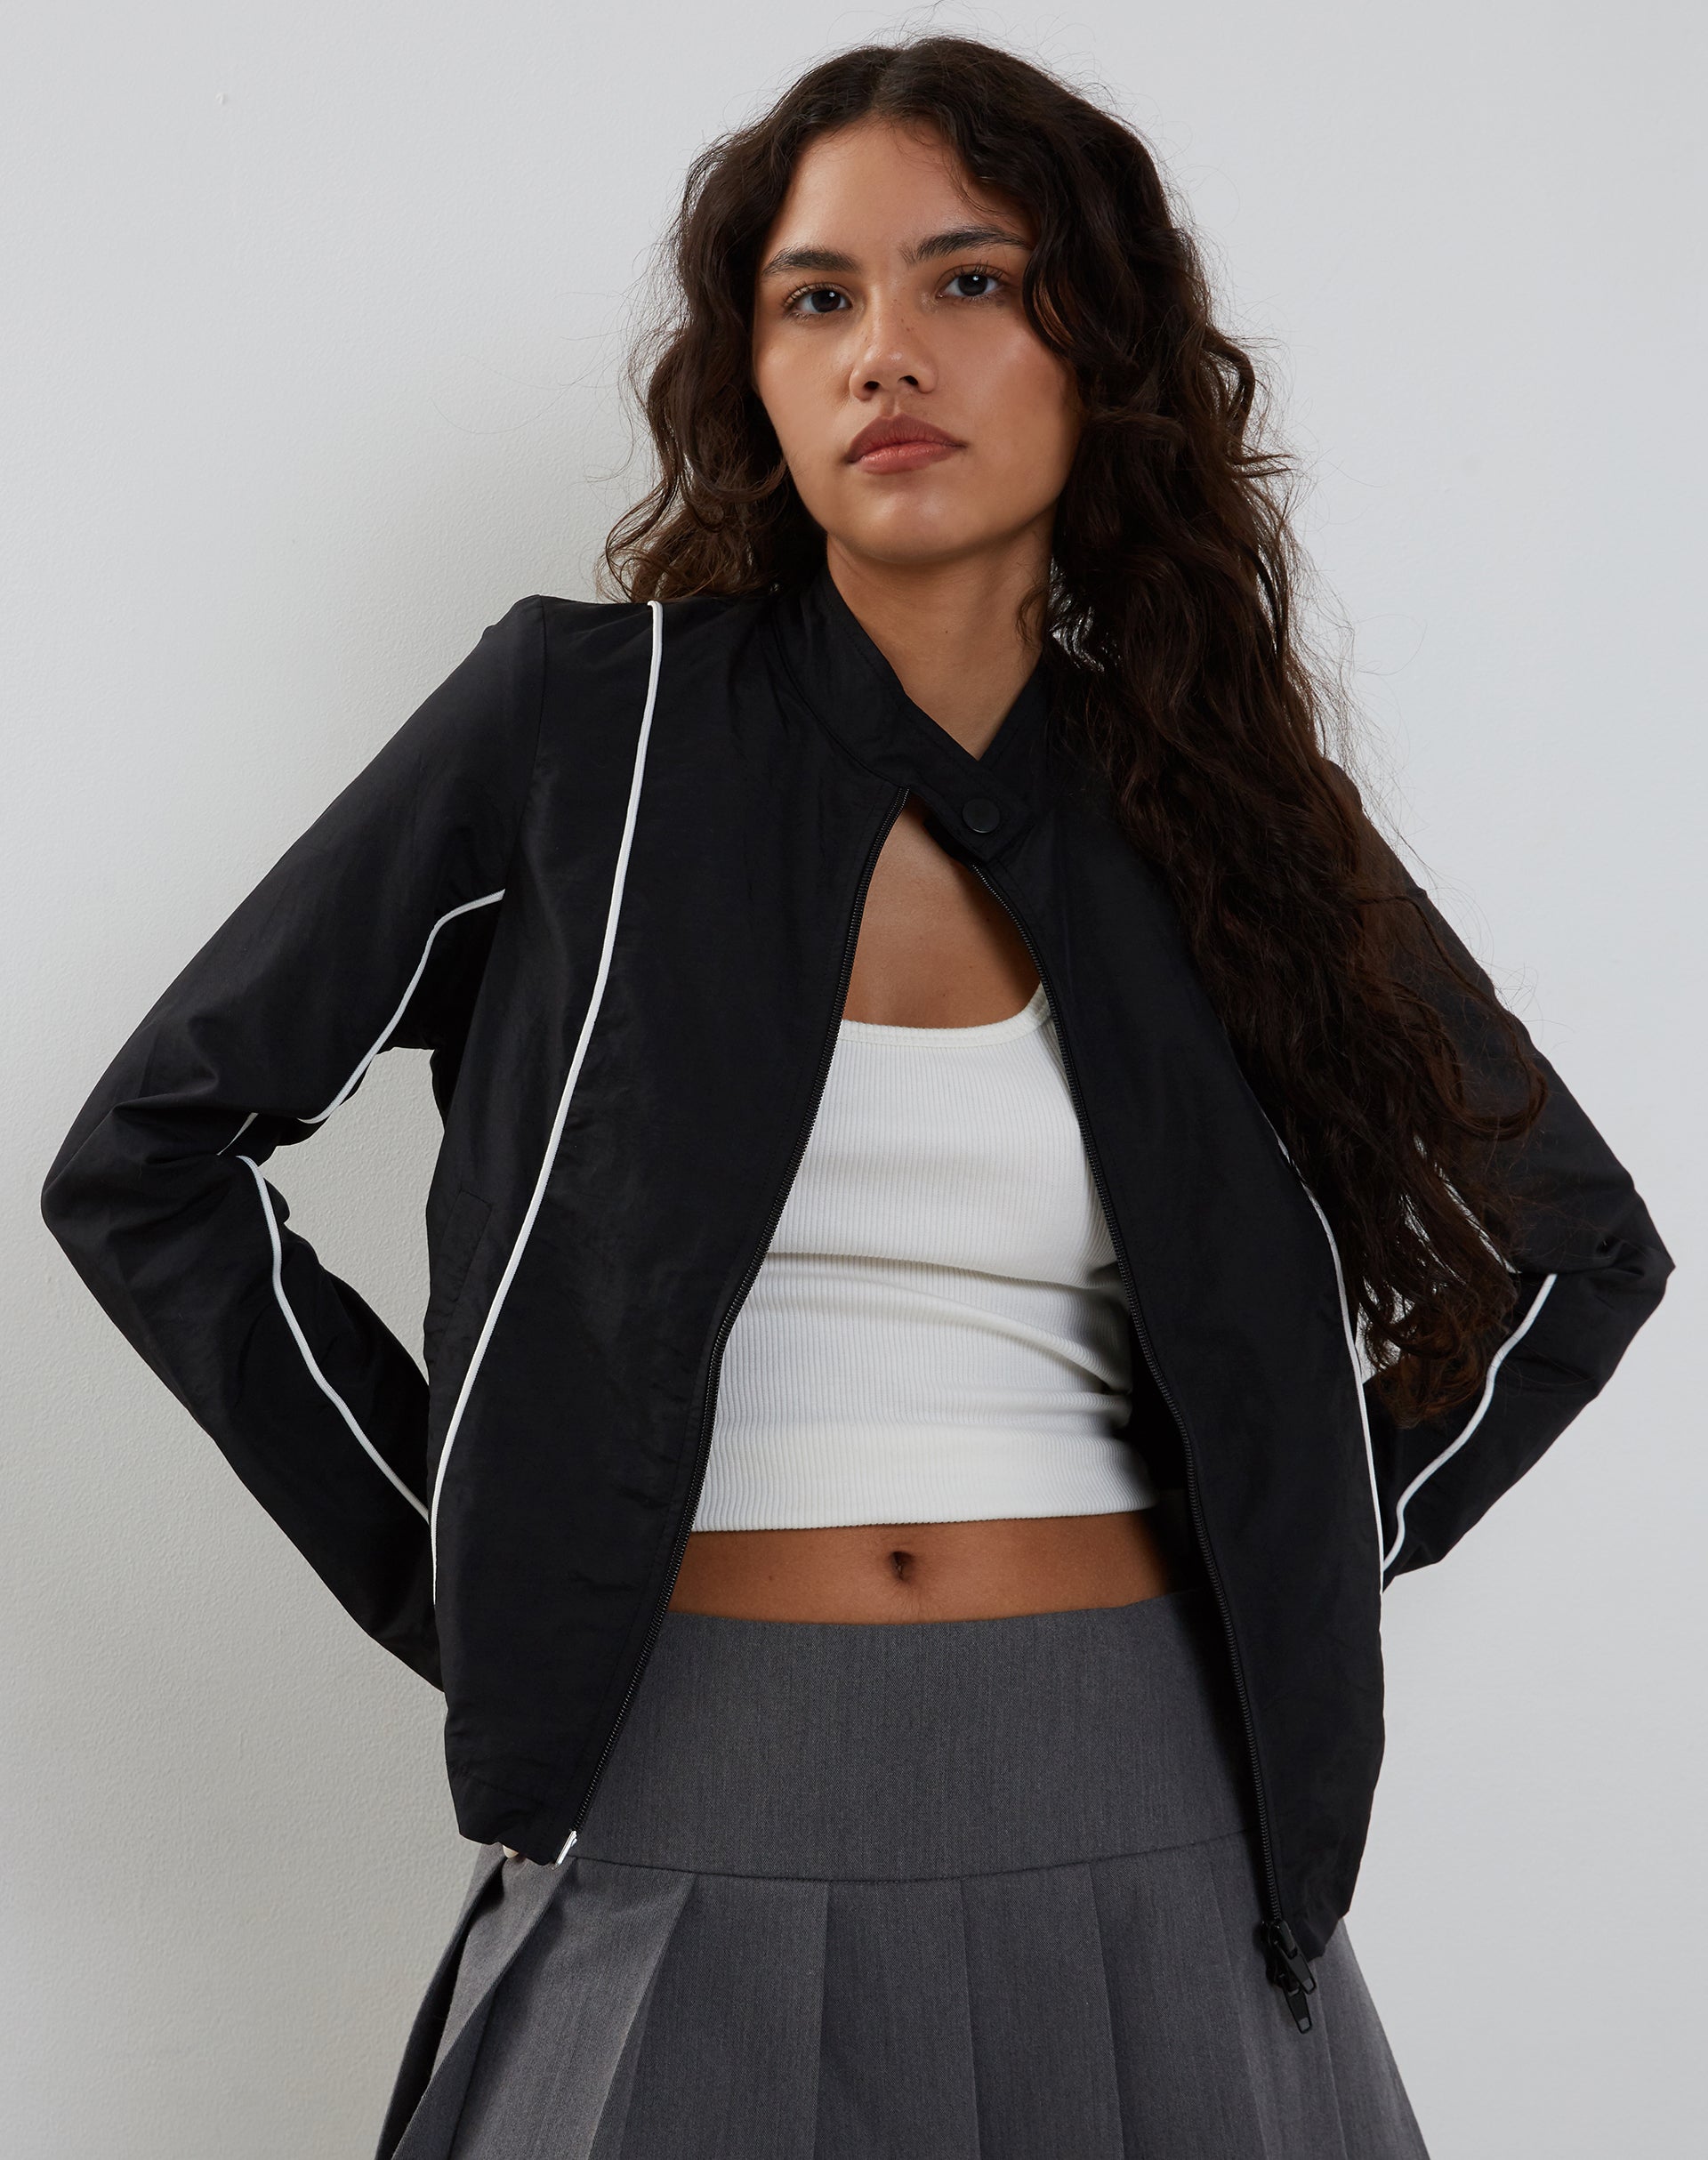 Buy XiuG Women's Long Sleeve Crop Top Biker Zip Up Bomber Jacket Coat with  Pocket Jackets (Color : Black, Size : L) at Amazon.in